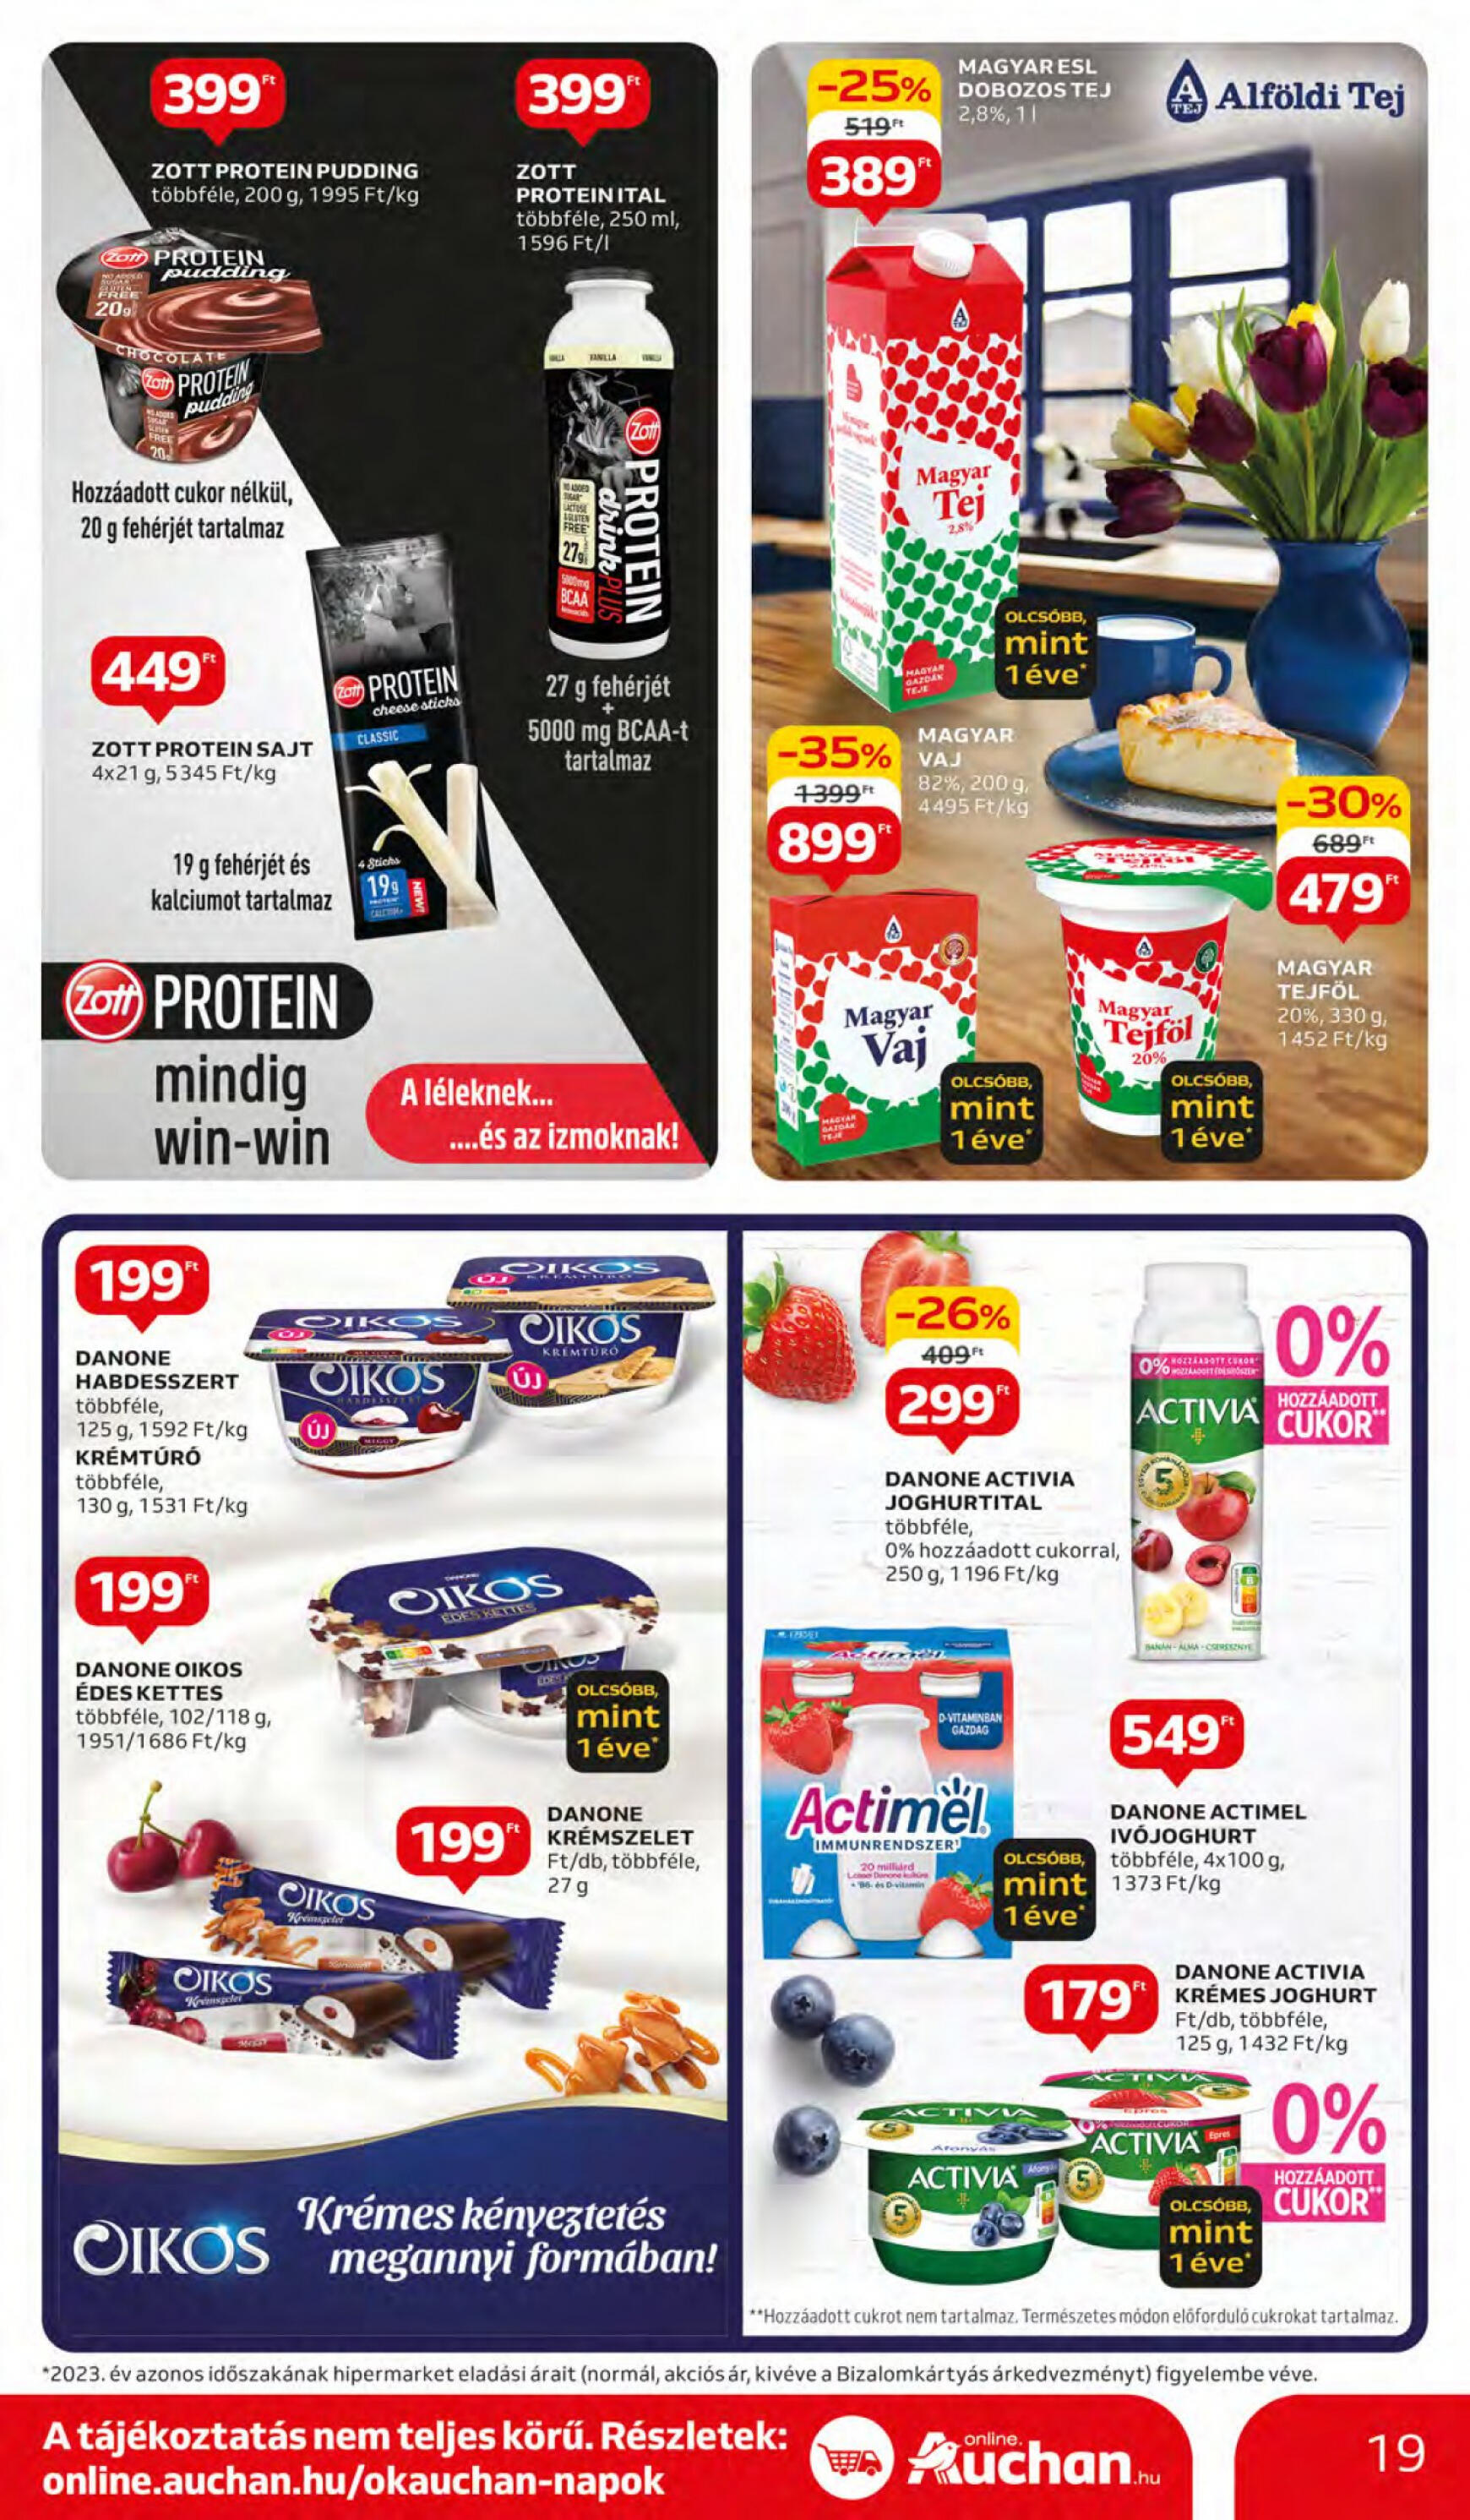 auchan - Aktuális újság Auchan 04.11. - 04.17. - page: 19